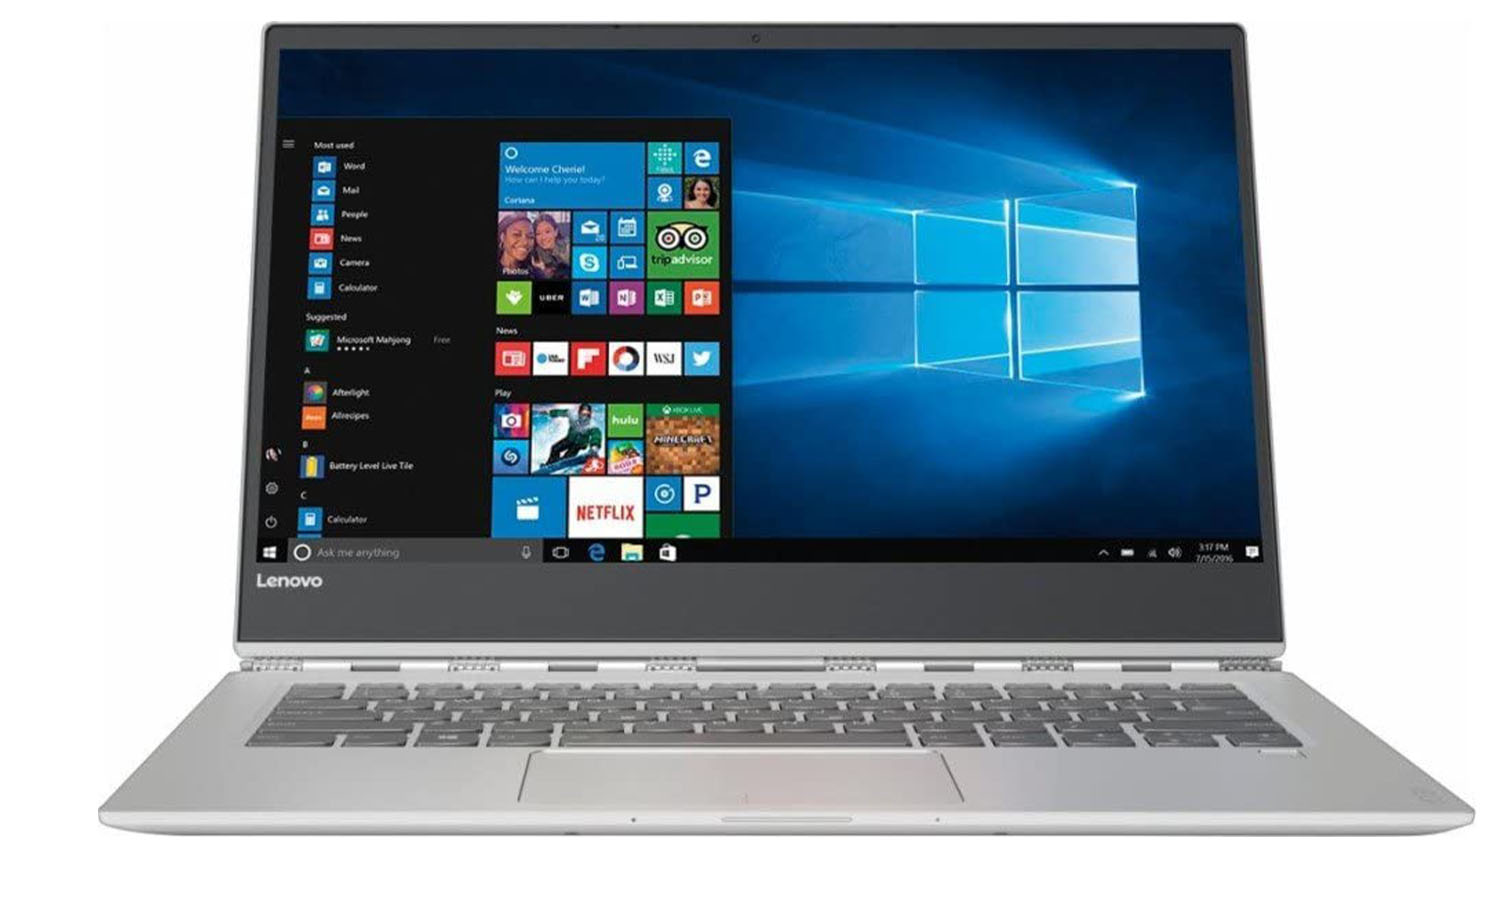 Lenovo Yoga 920 Intel Core i7 8th Gen 8GB RAM 256GB SSD Windows 10 Home